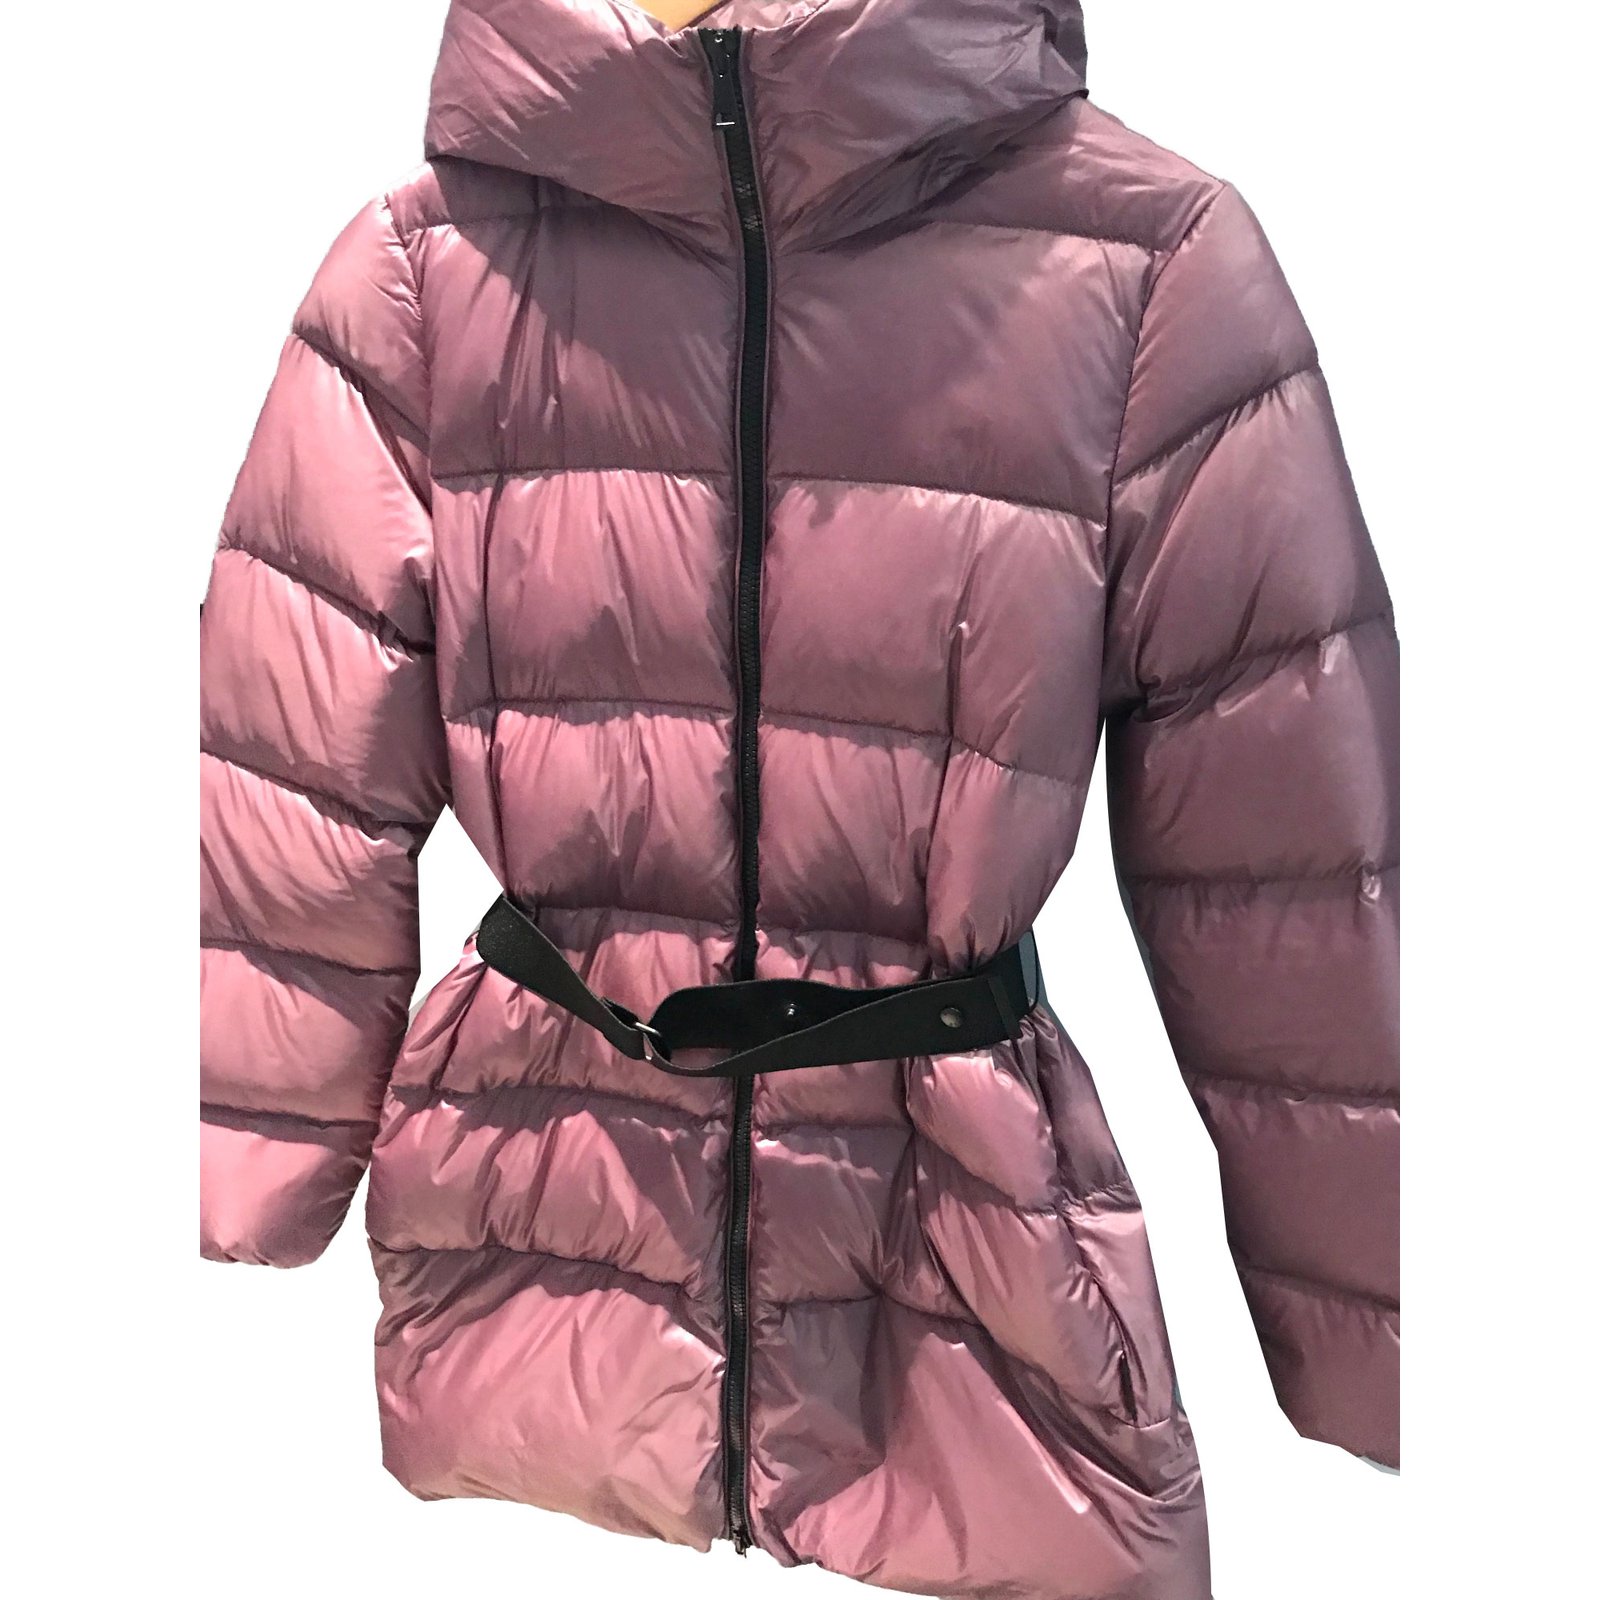 moncler jacket size 1